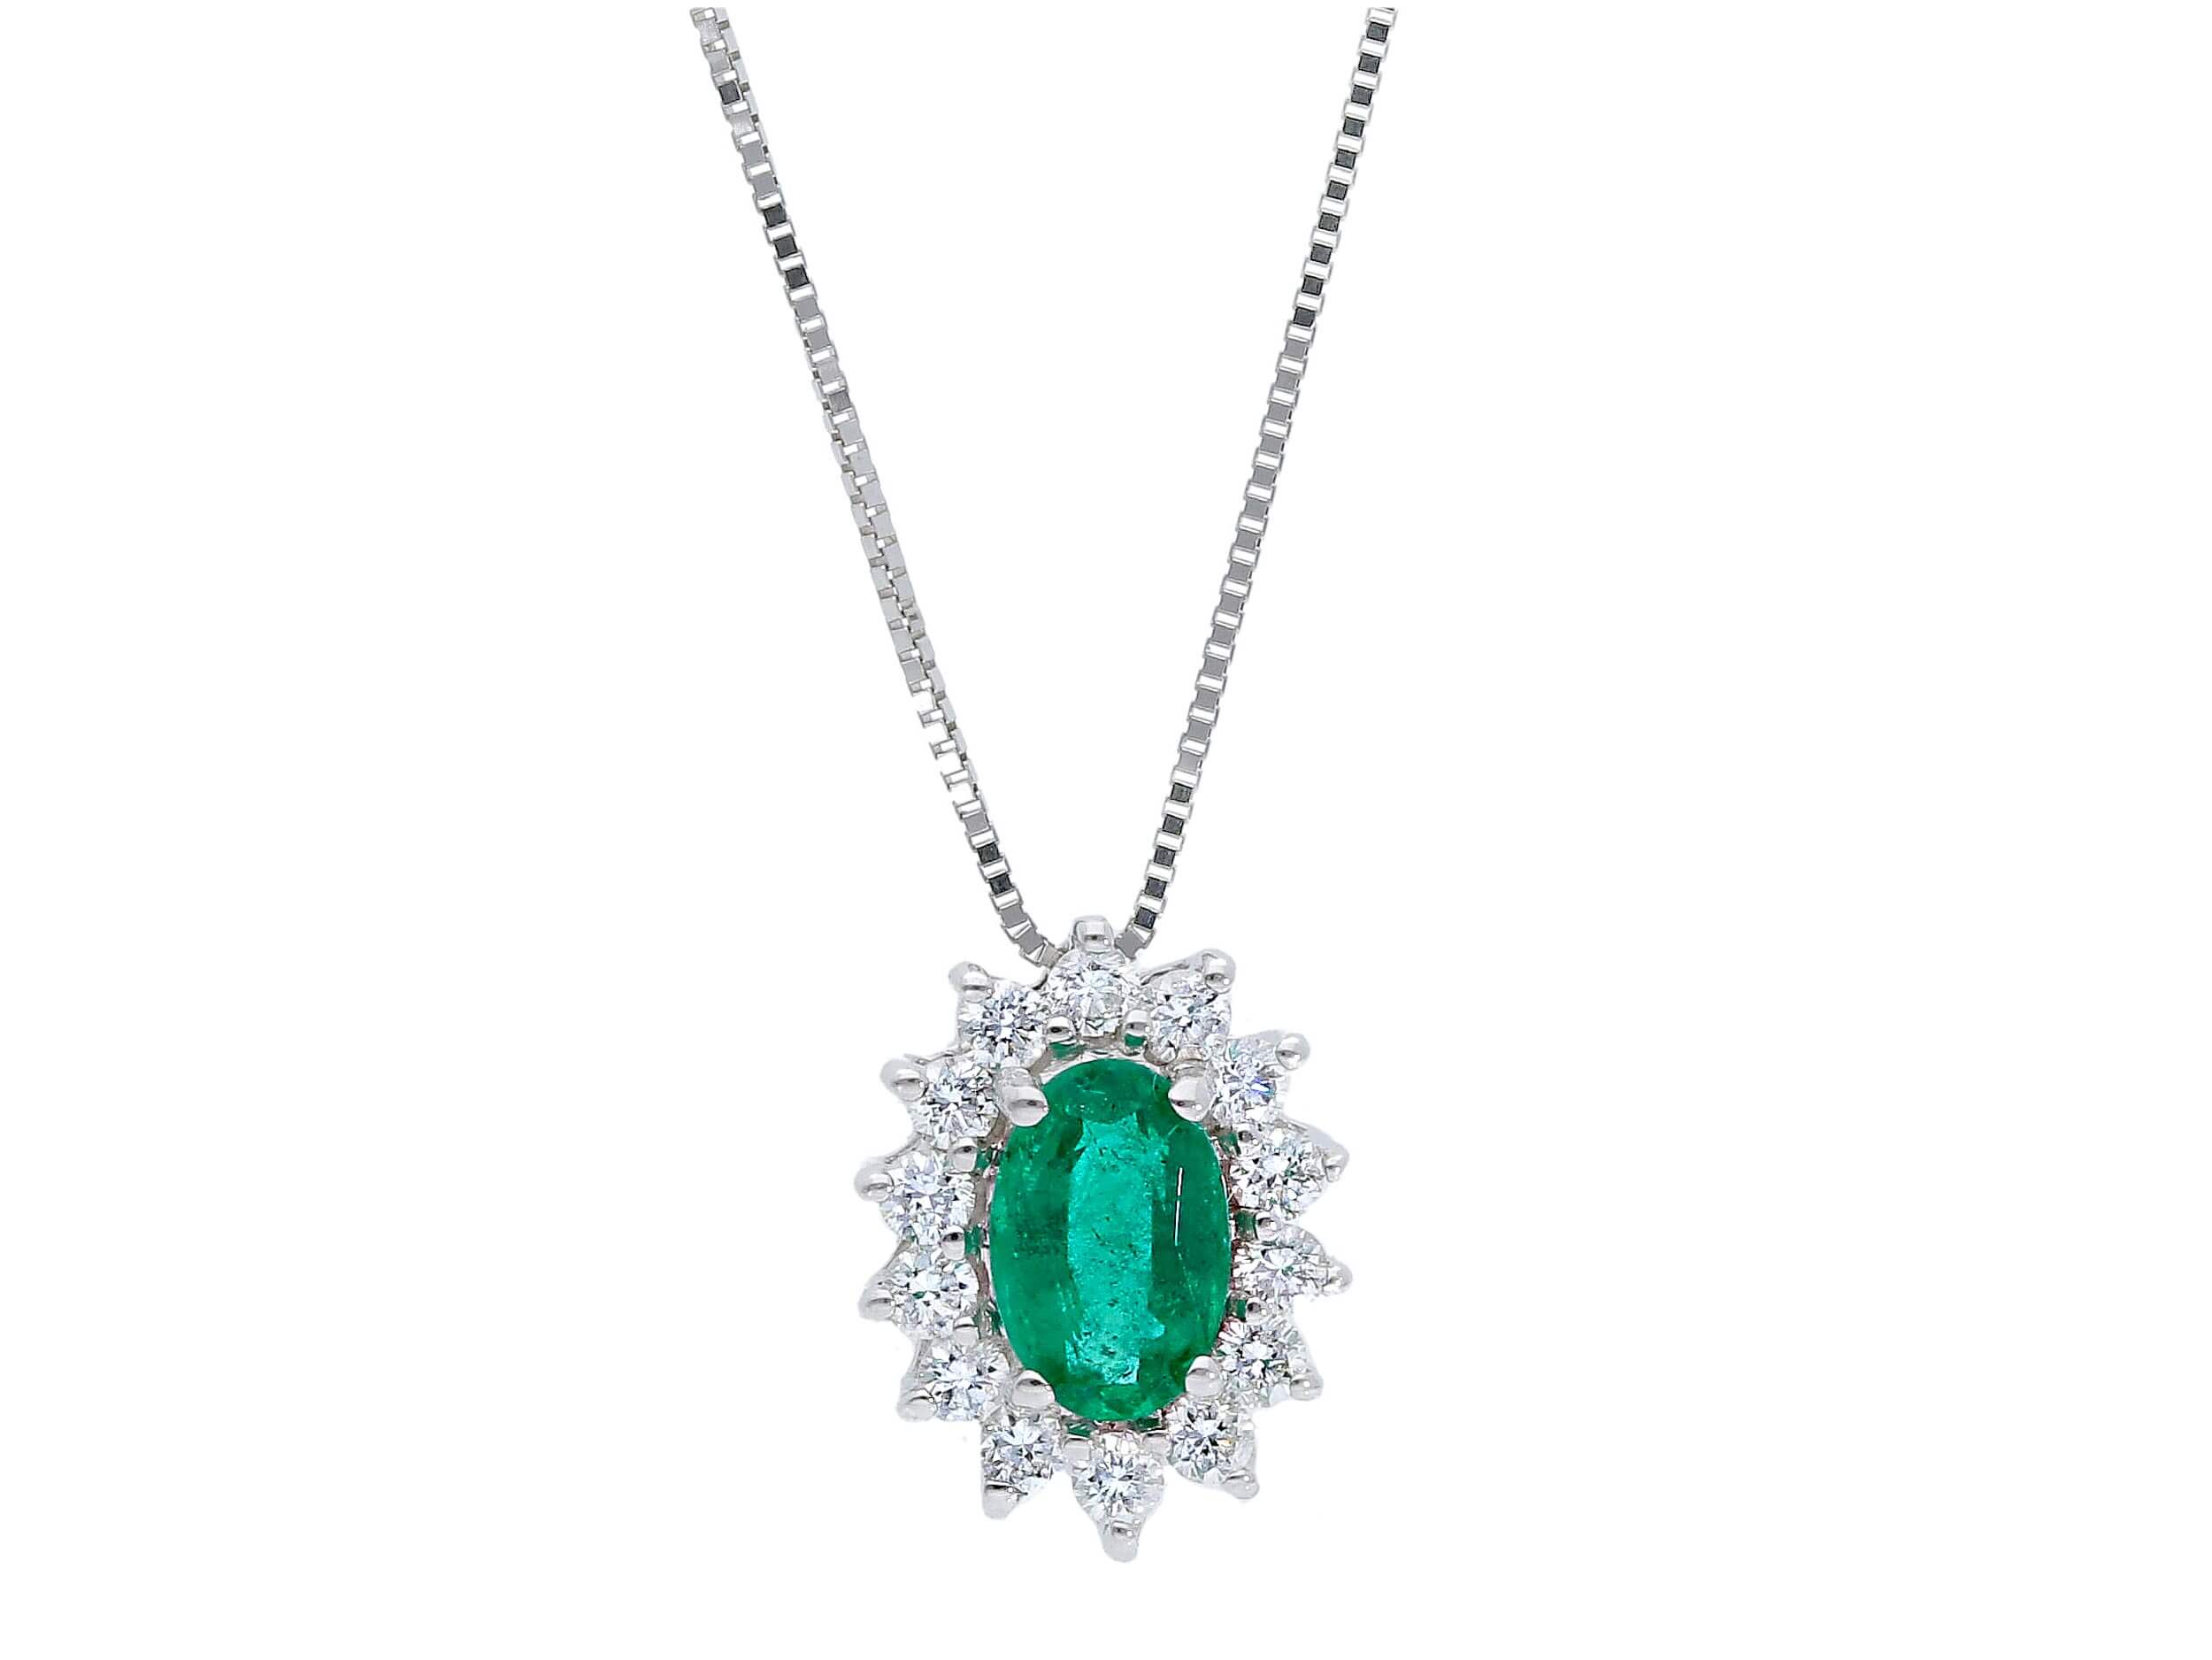 Emerald pendant white gold 750% Art.135032